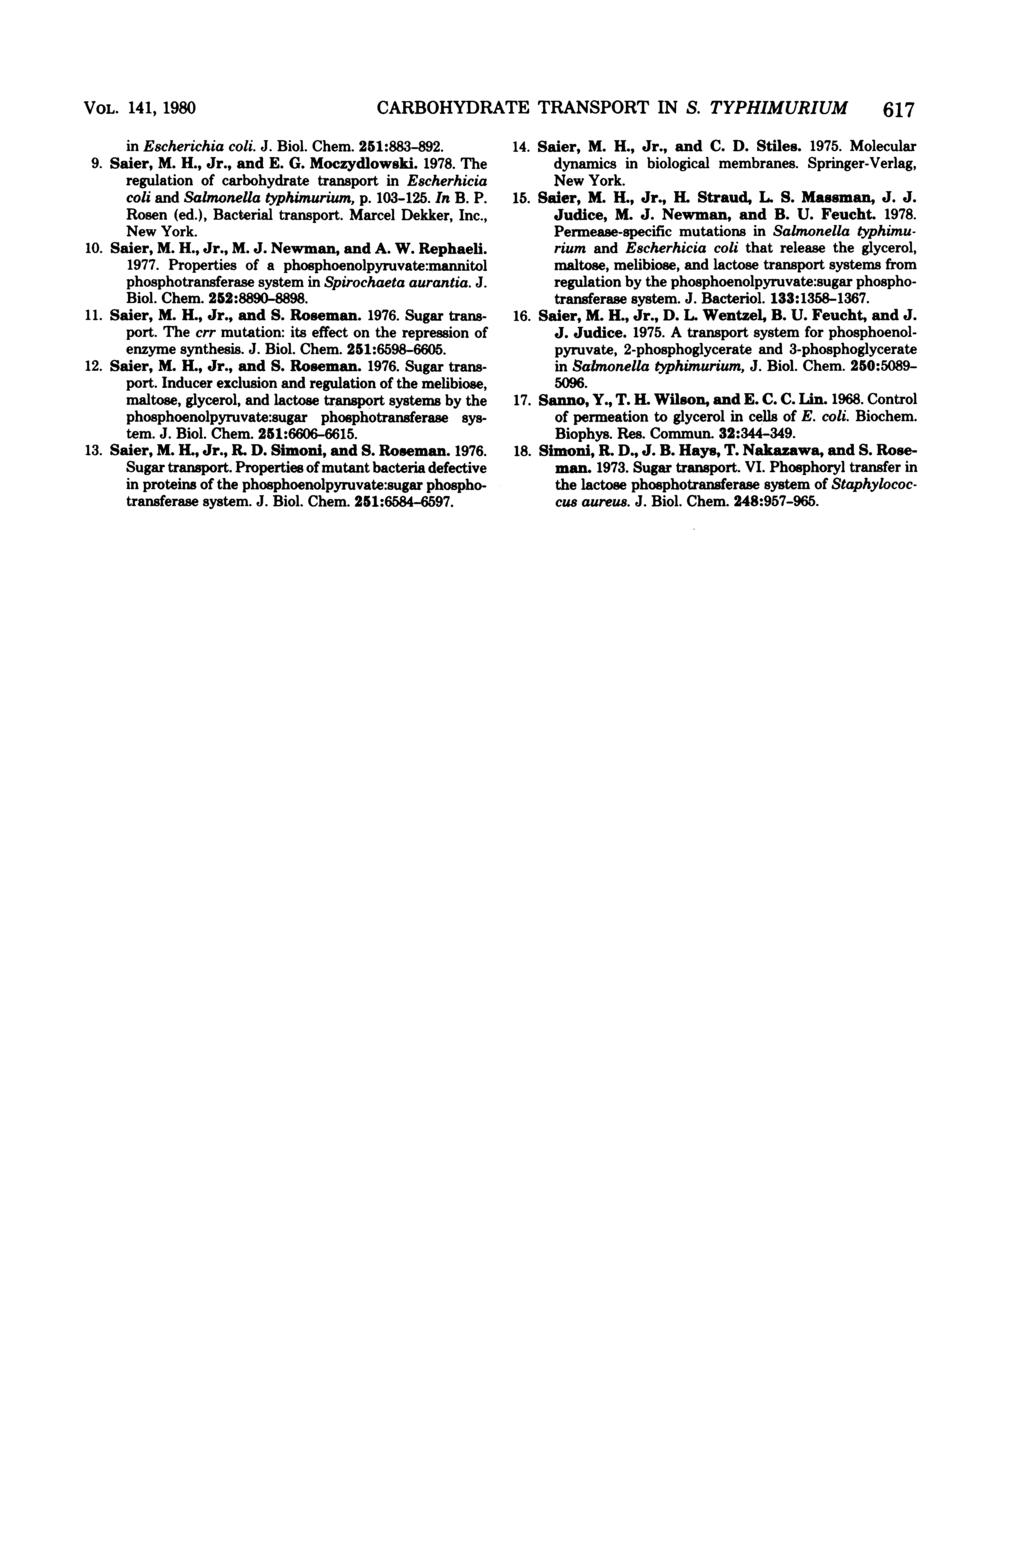 VOL. 141, 1980 CARBOHYDRATE TRANSPORT IN S. TYPHIMURIUM 617 in Escherichia coli. J. Biol. Chem. 251:883-892. 9. Saier, M. H., Jr., and E. G. Moczydlowski. 1978.